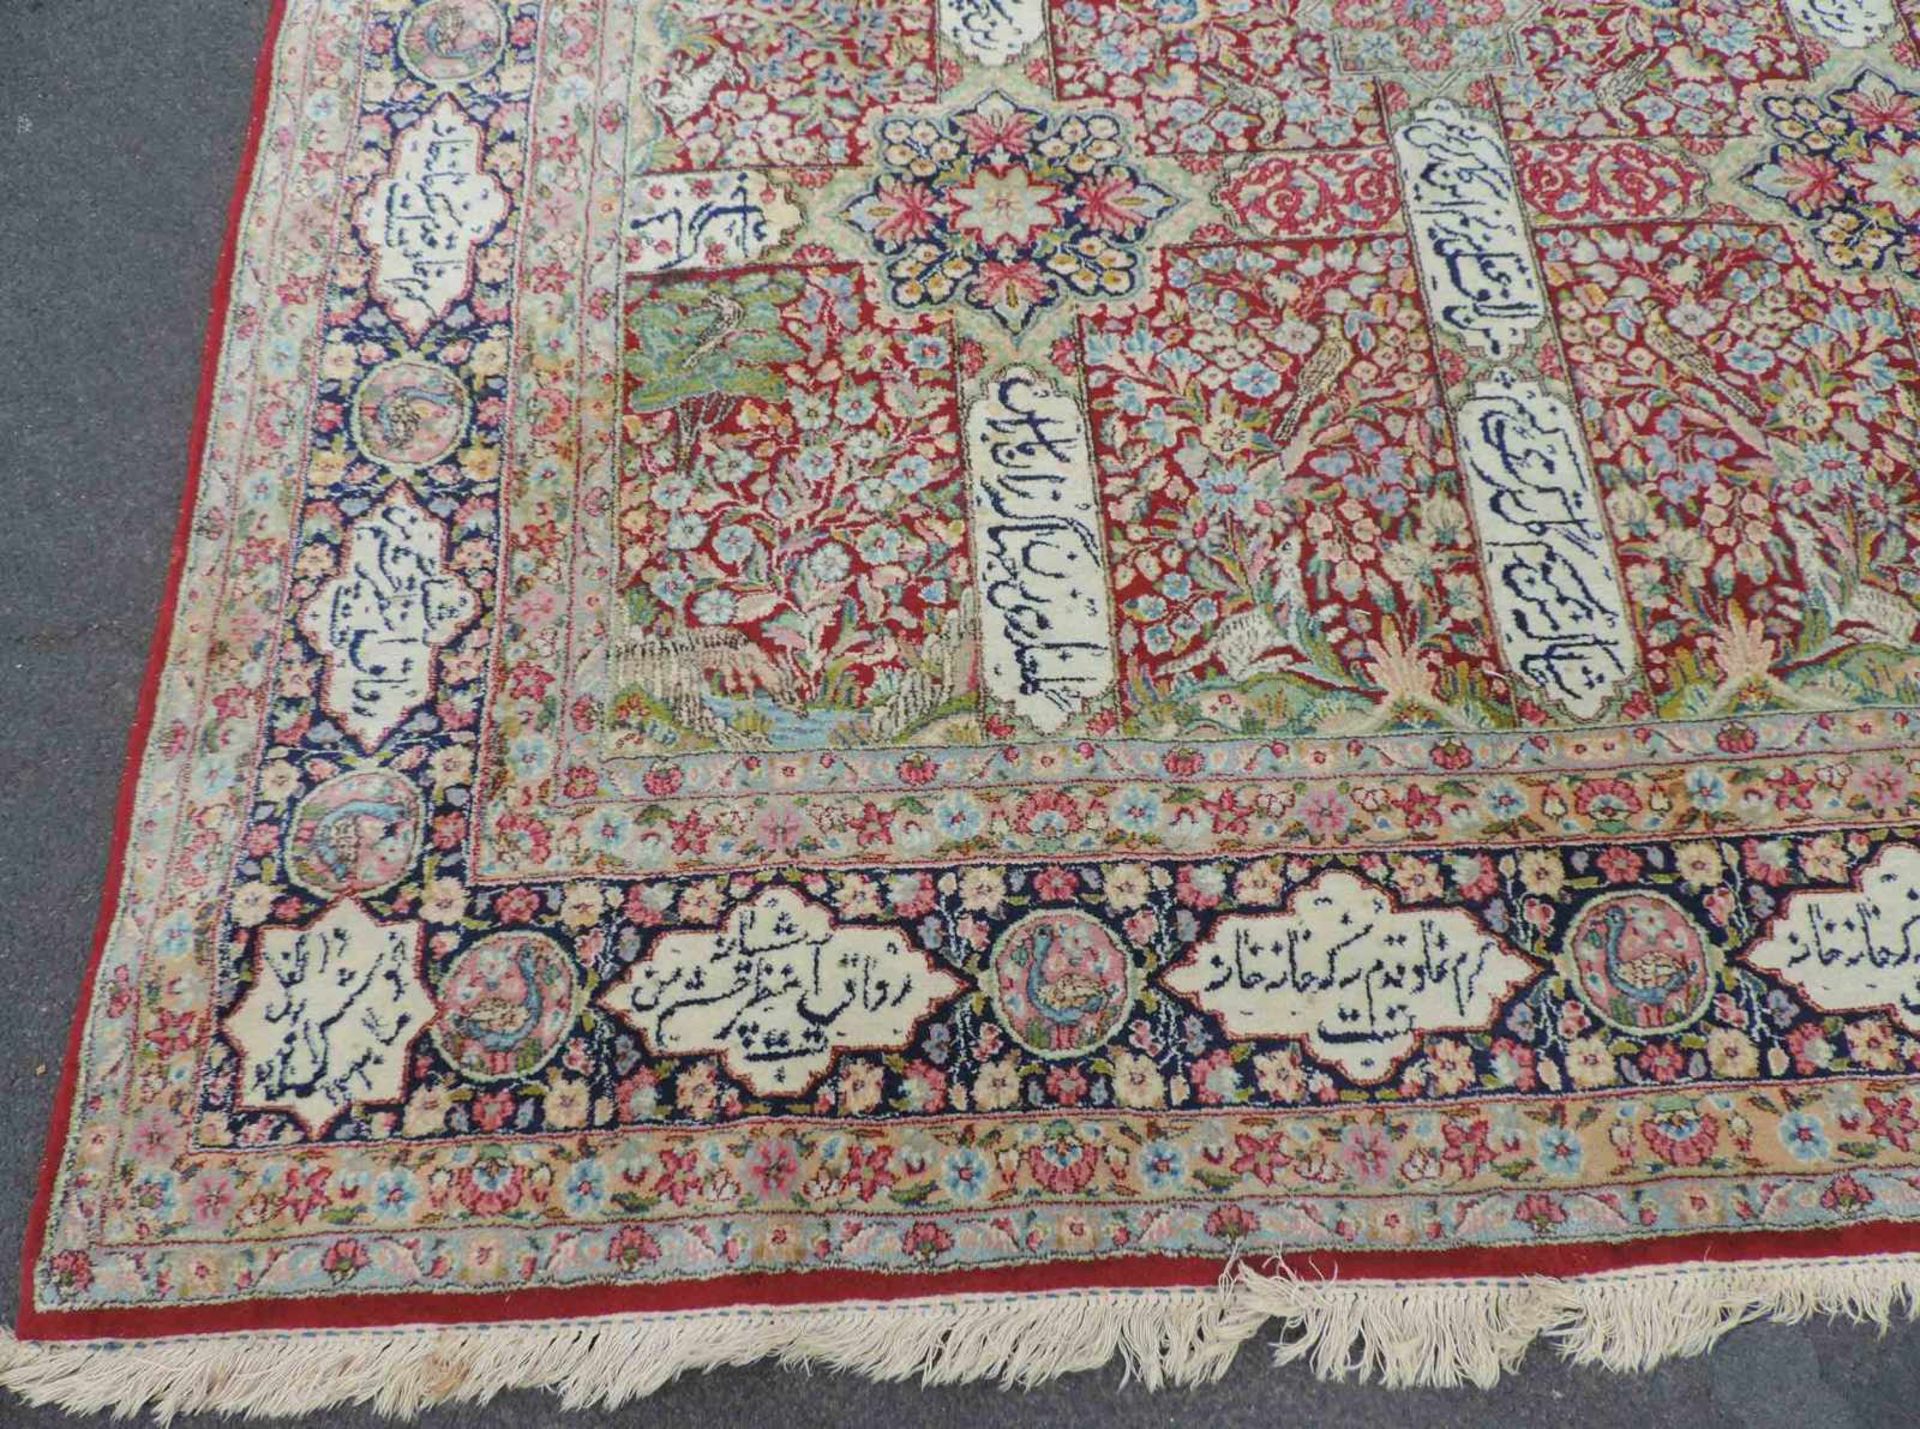 Kirman Garten - Teppich. Iran. Feine Knüpfung. Datiert 1390 (1972). 342 cm x 248 cm. Handgeknüpft. - Bild 2 aus 8